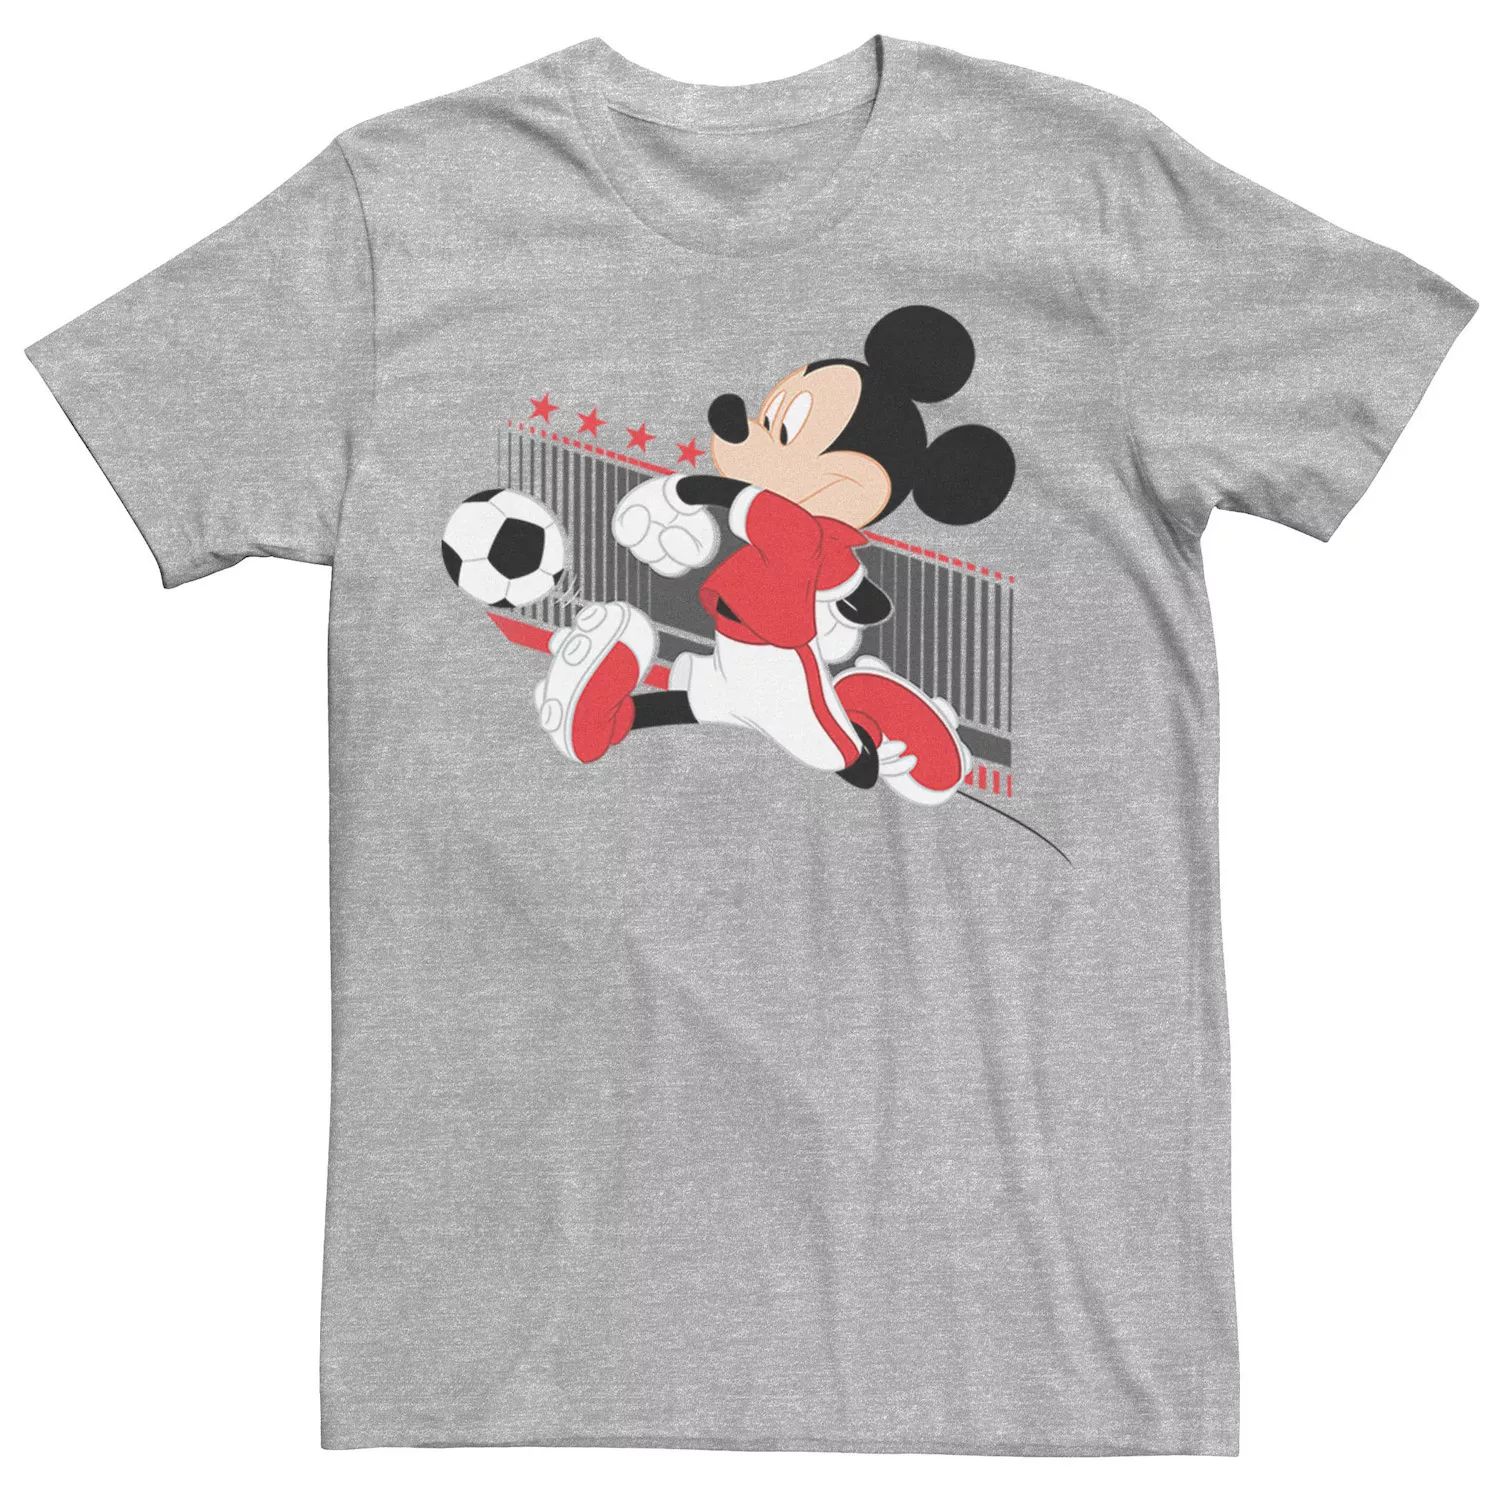 Мужская футболка с портретом Микки Мауса Дании, футбольная форма Disney мужская футболка с изображением микки мауса бразильская футбольная форма портретная футболка disney